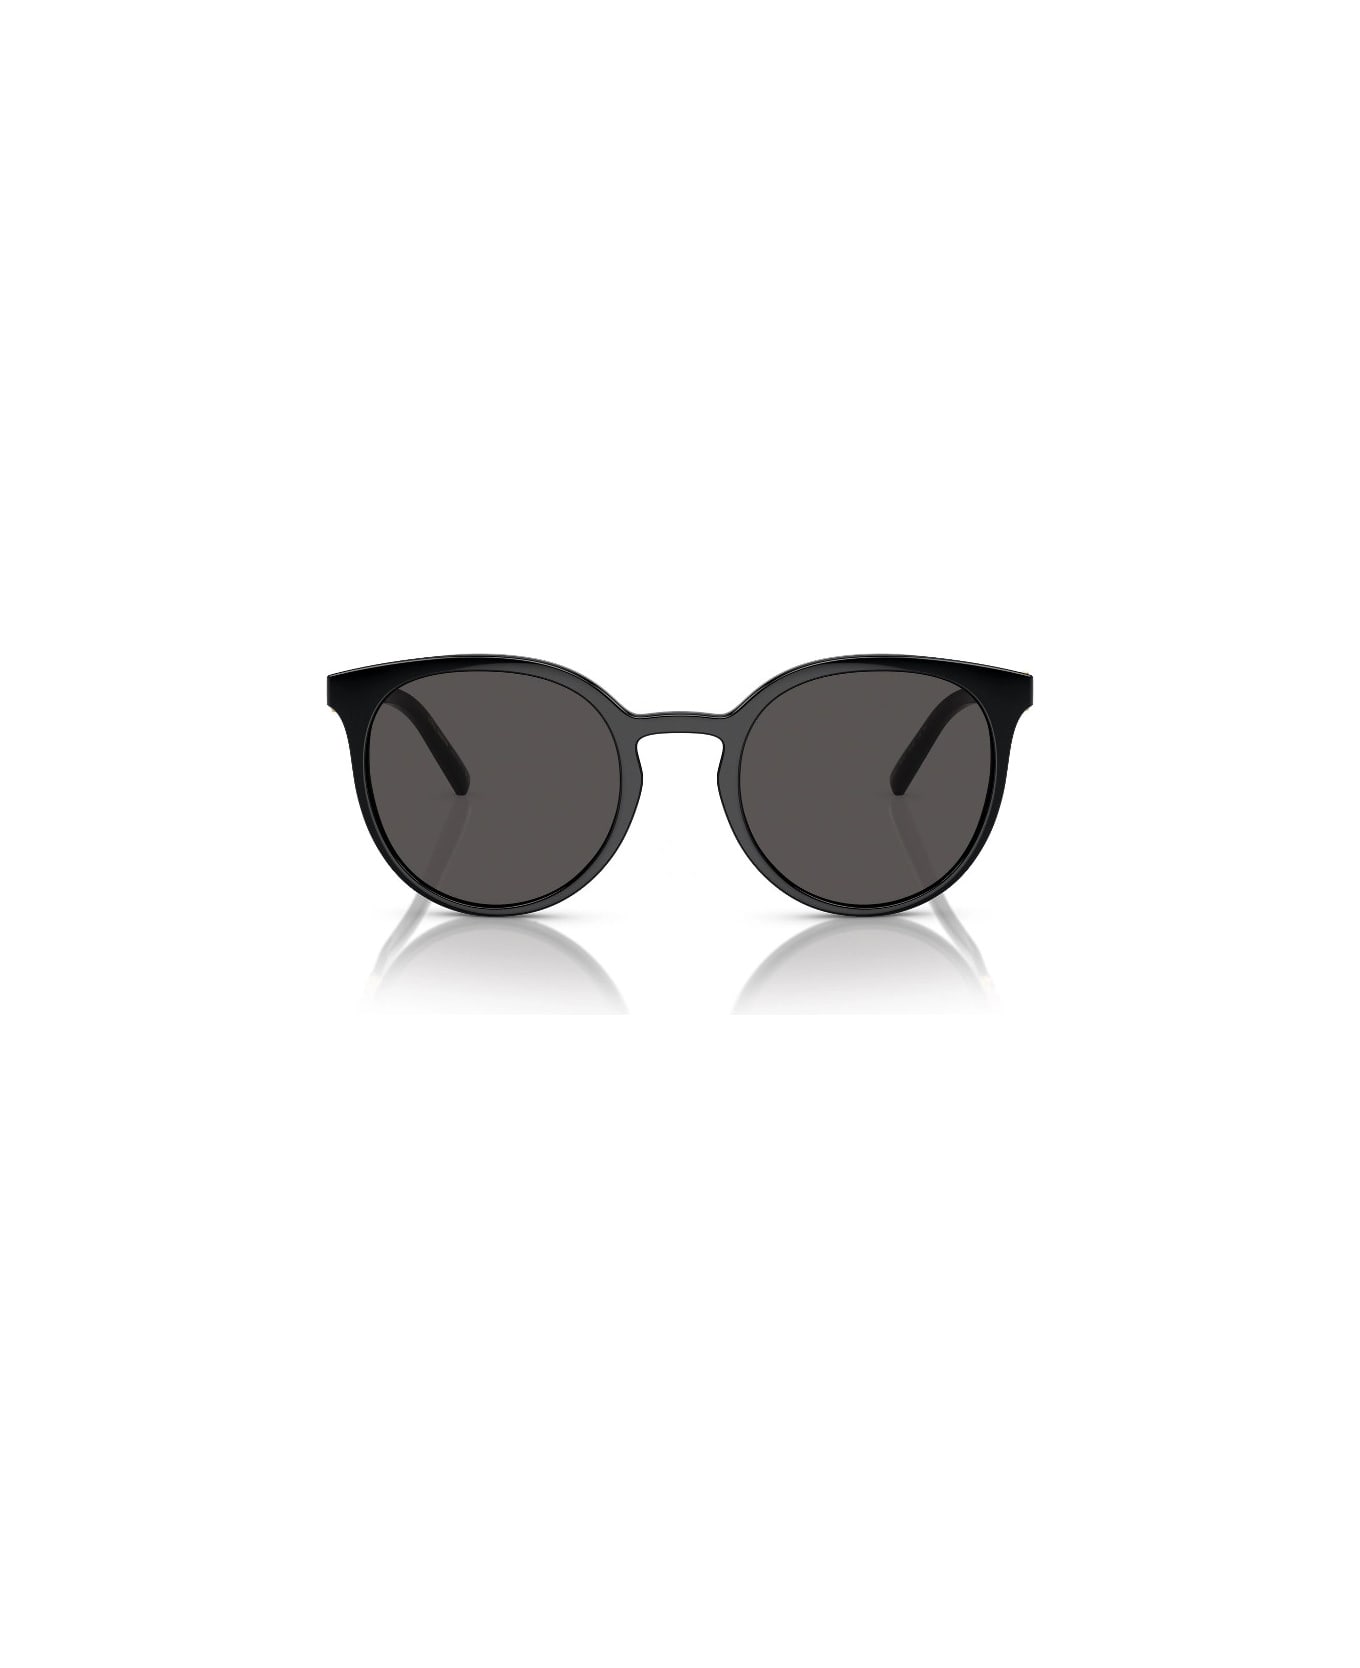 Dolce & Gabbana Eyewear DG6189 501/87 Sunglasses - Nero